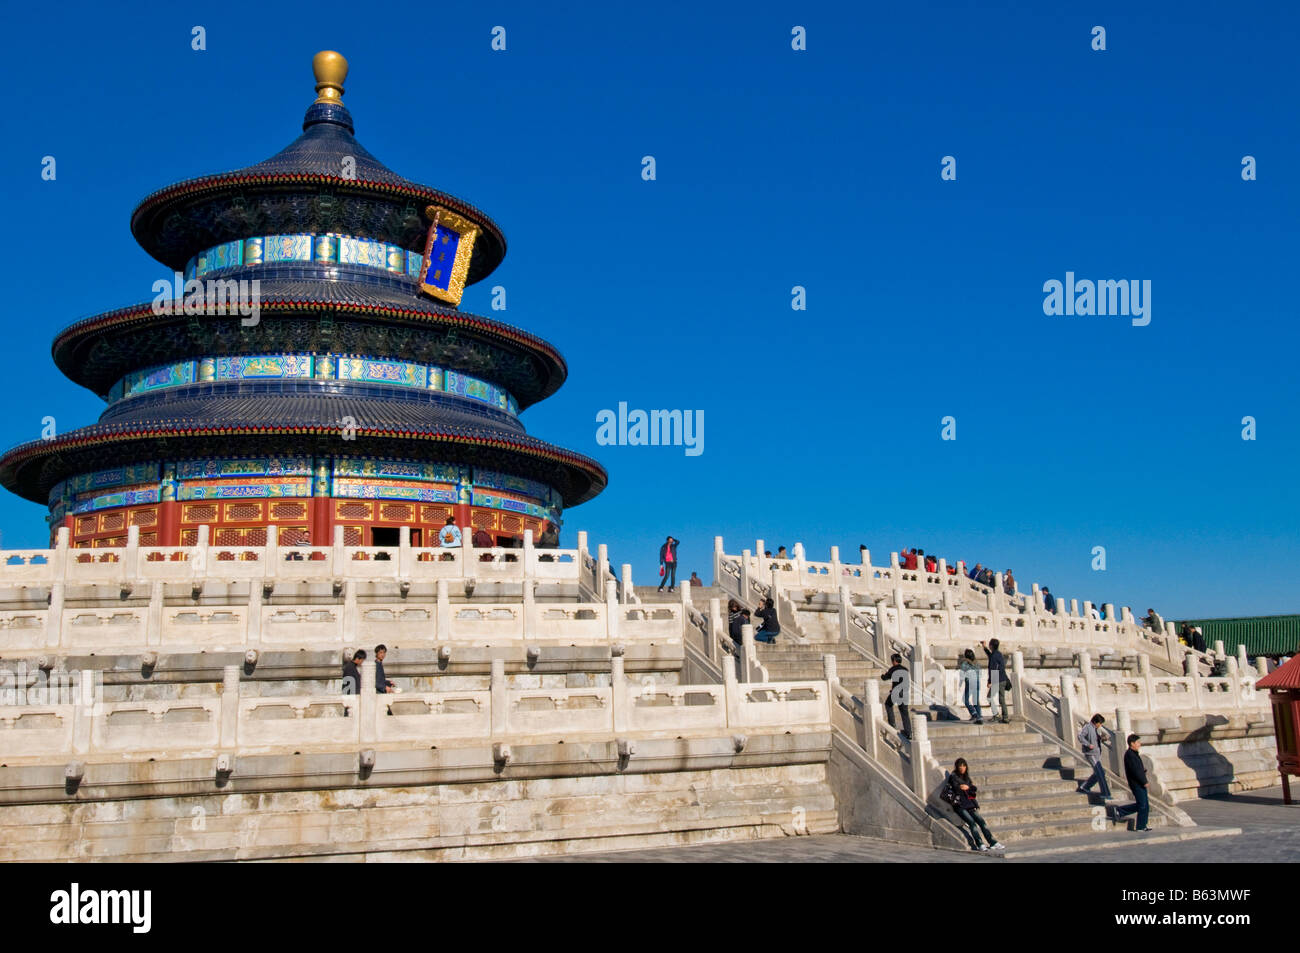 Temple of Heaven Beijing China Stock Photo - Alamy